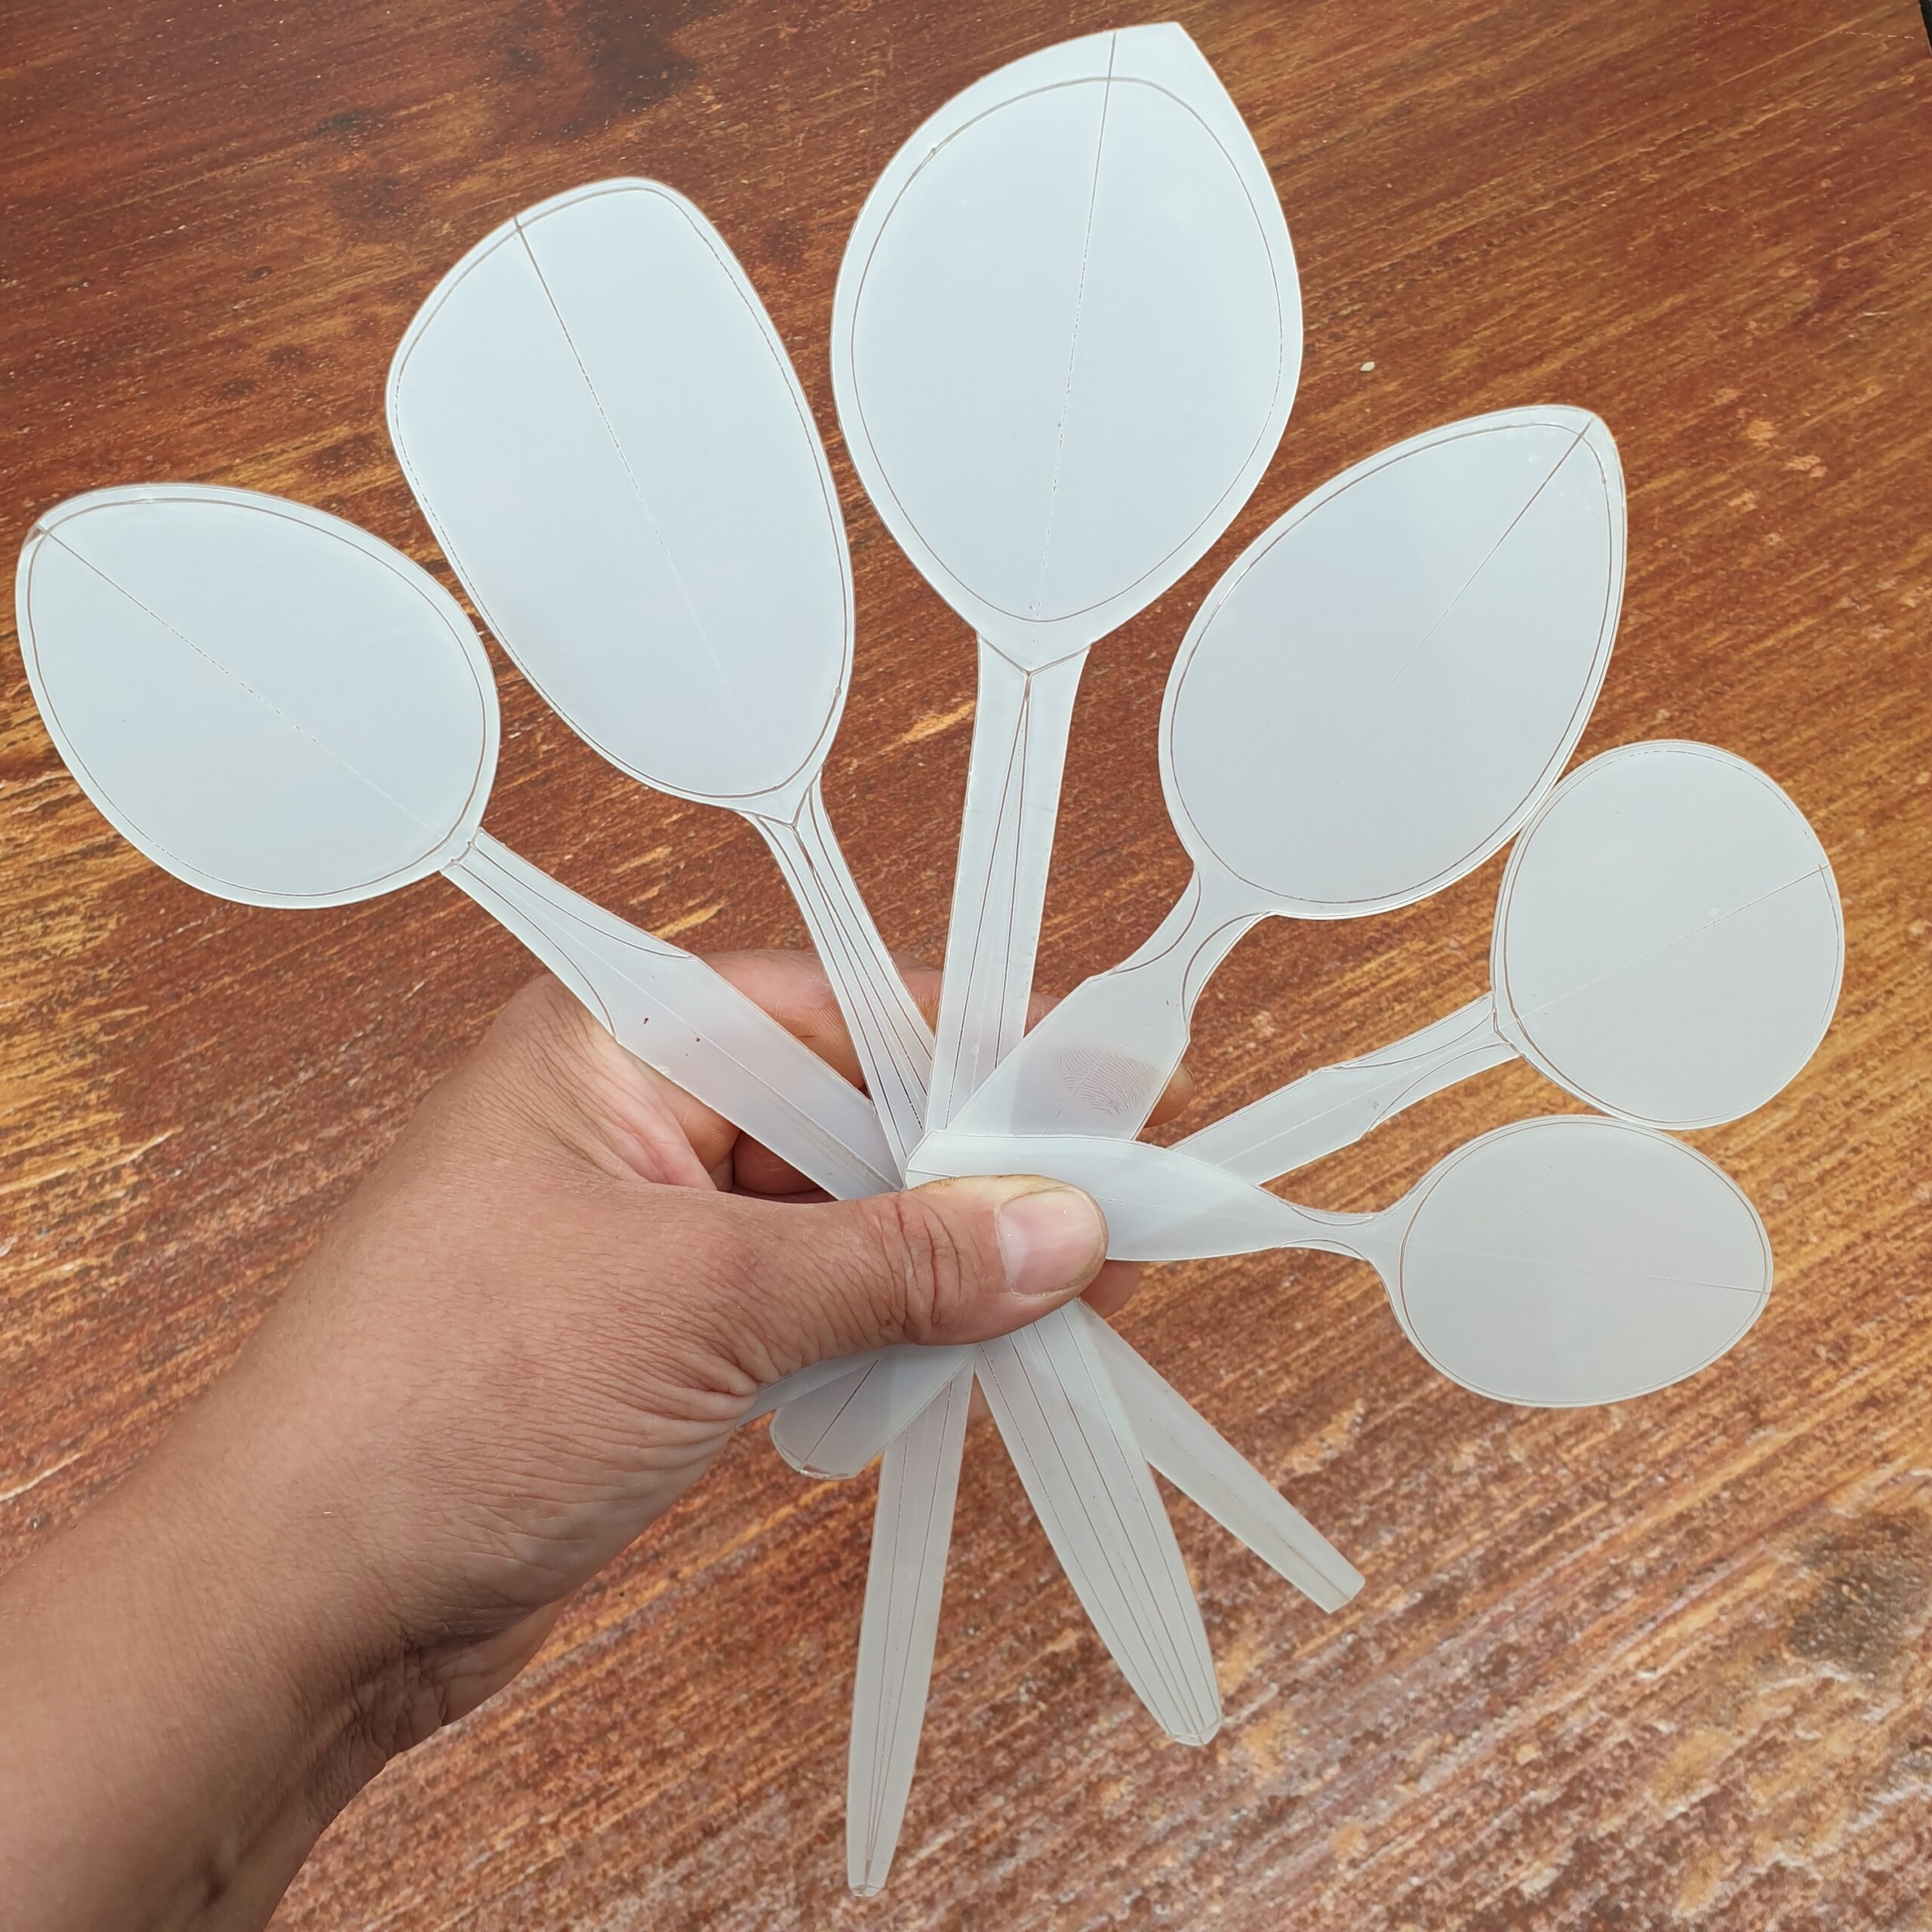 Blog Templates For Spoon Carving Carolina s Sloyd